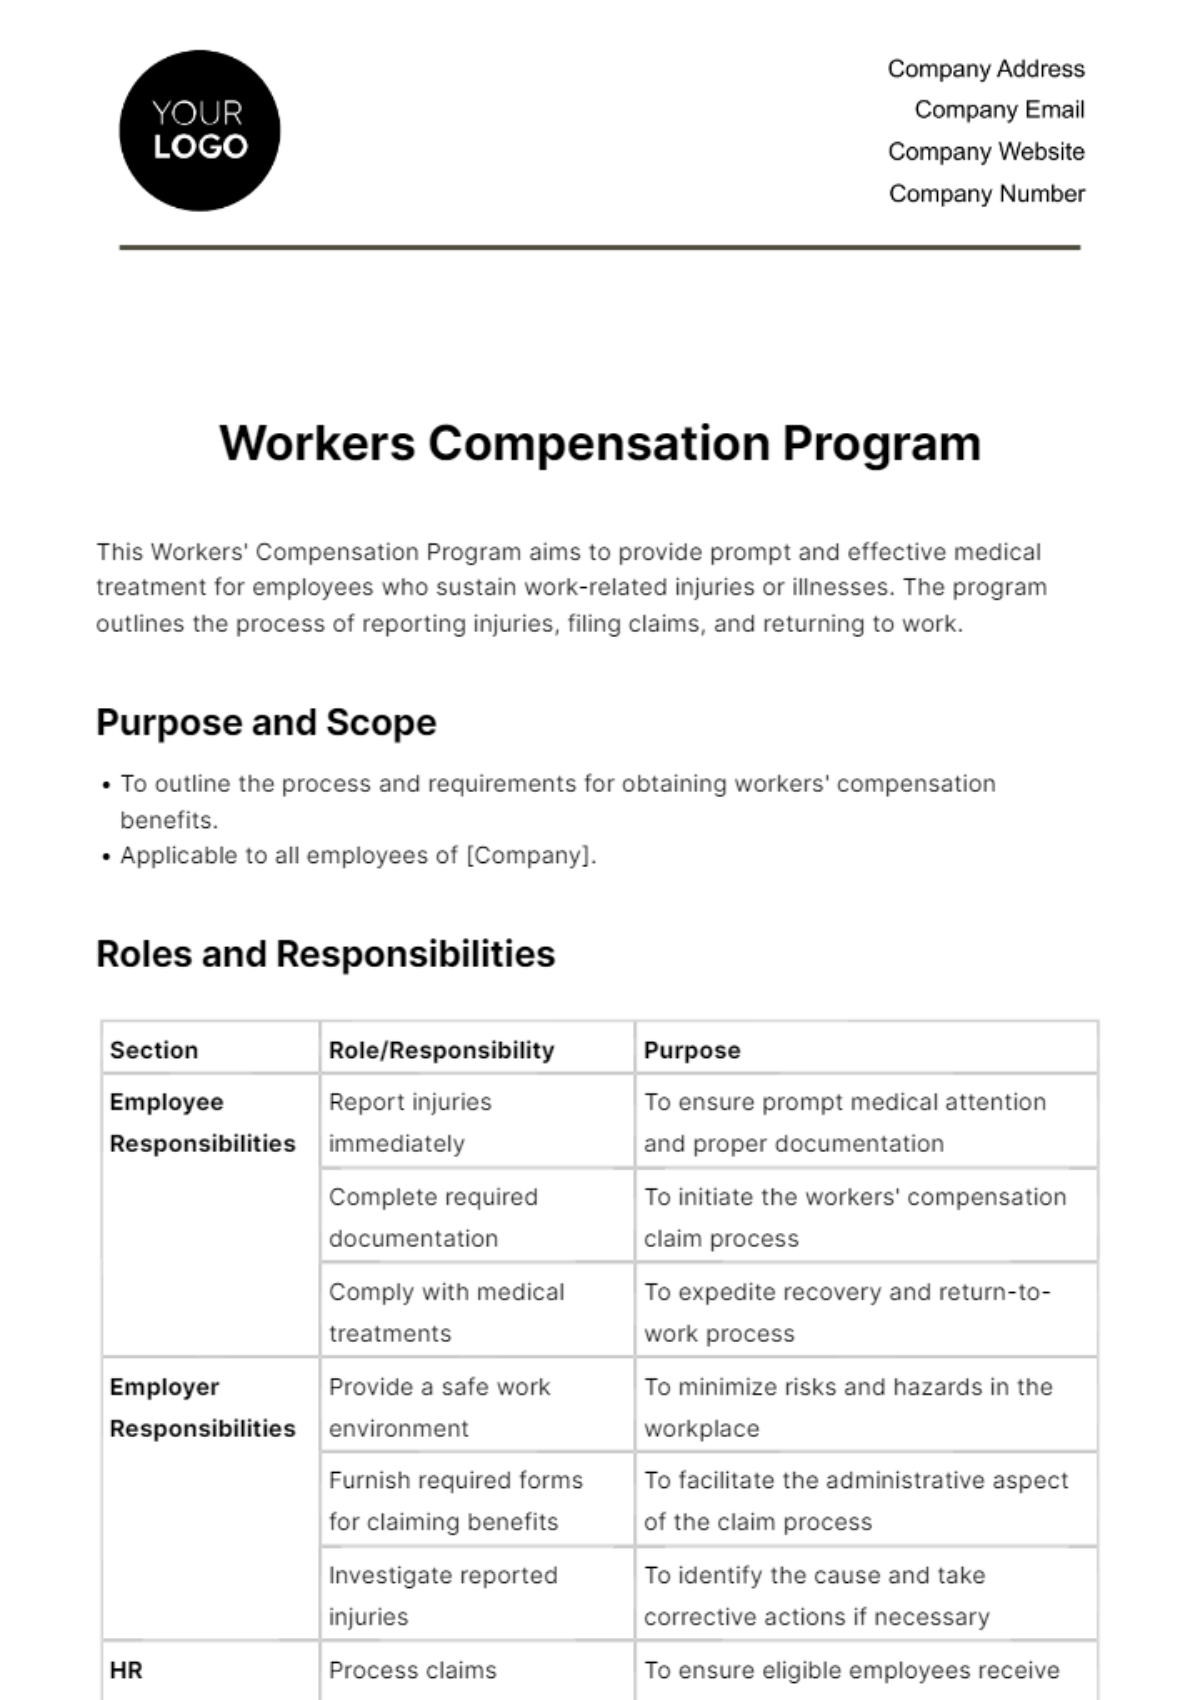 Workers Compensation Program HR Template